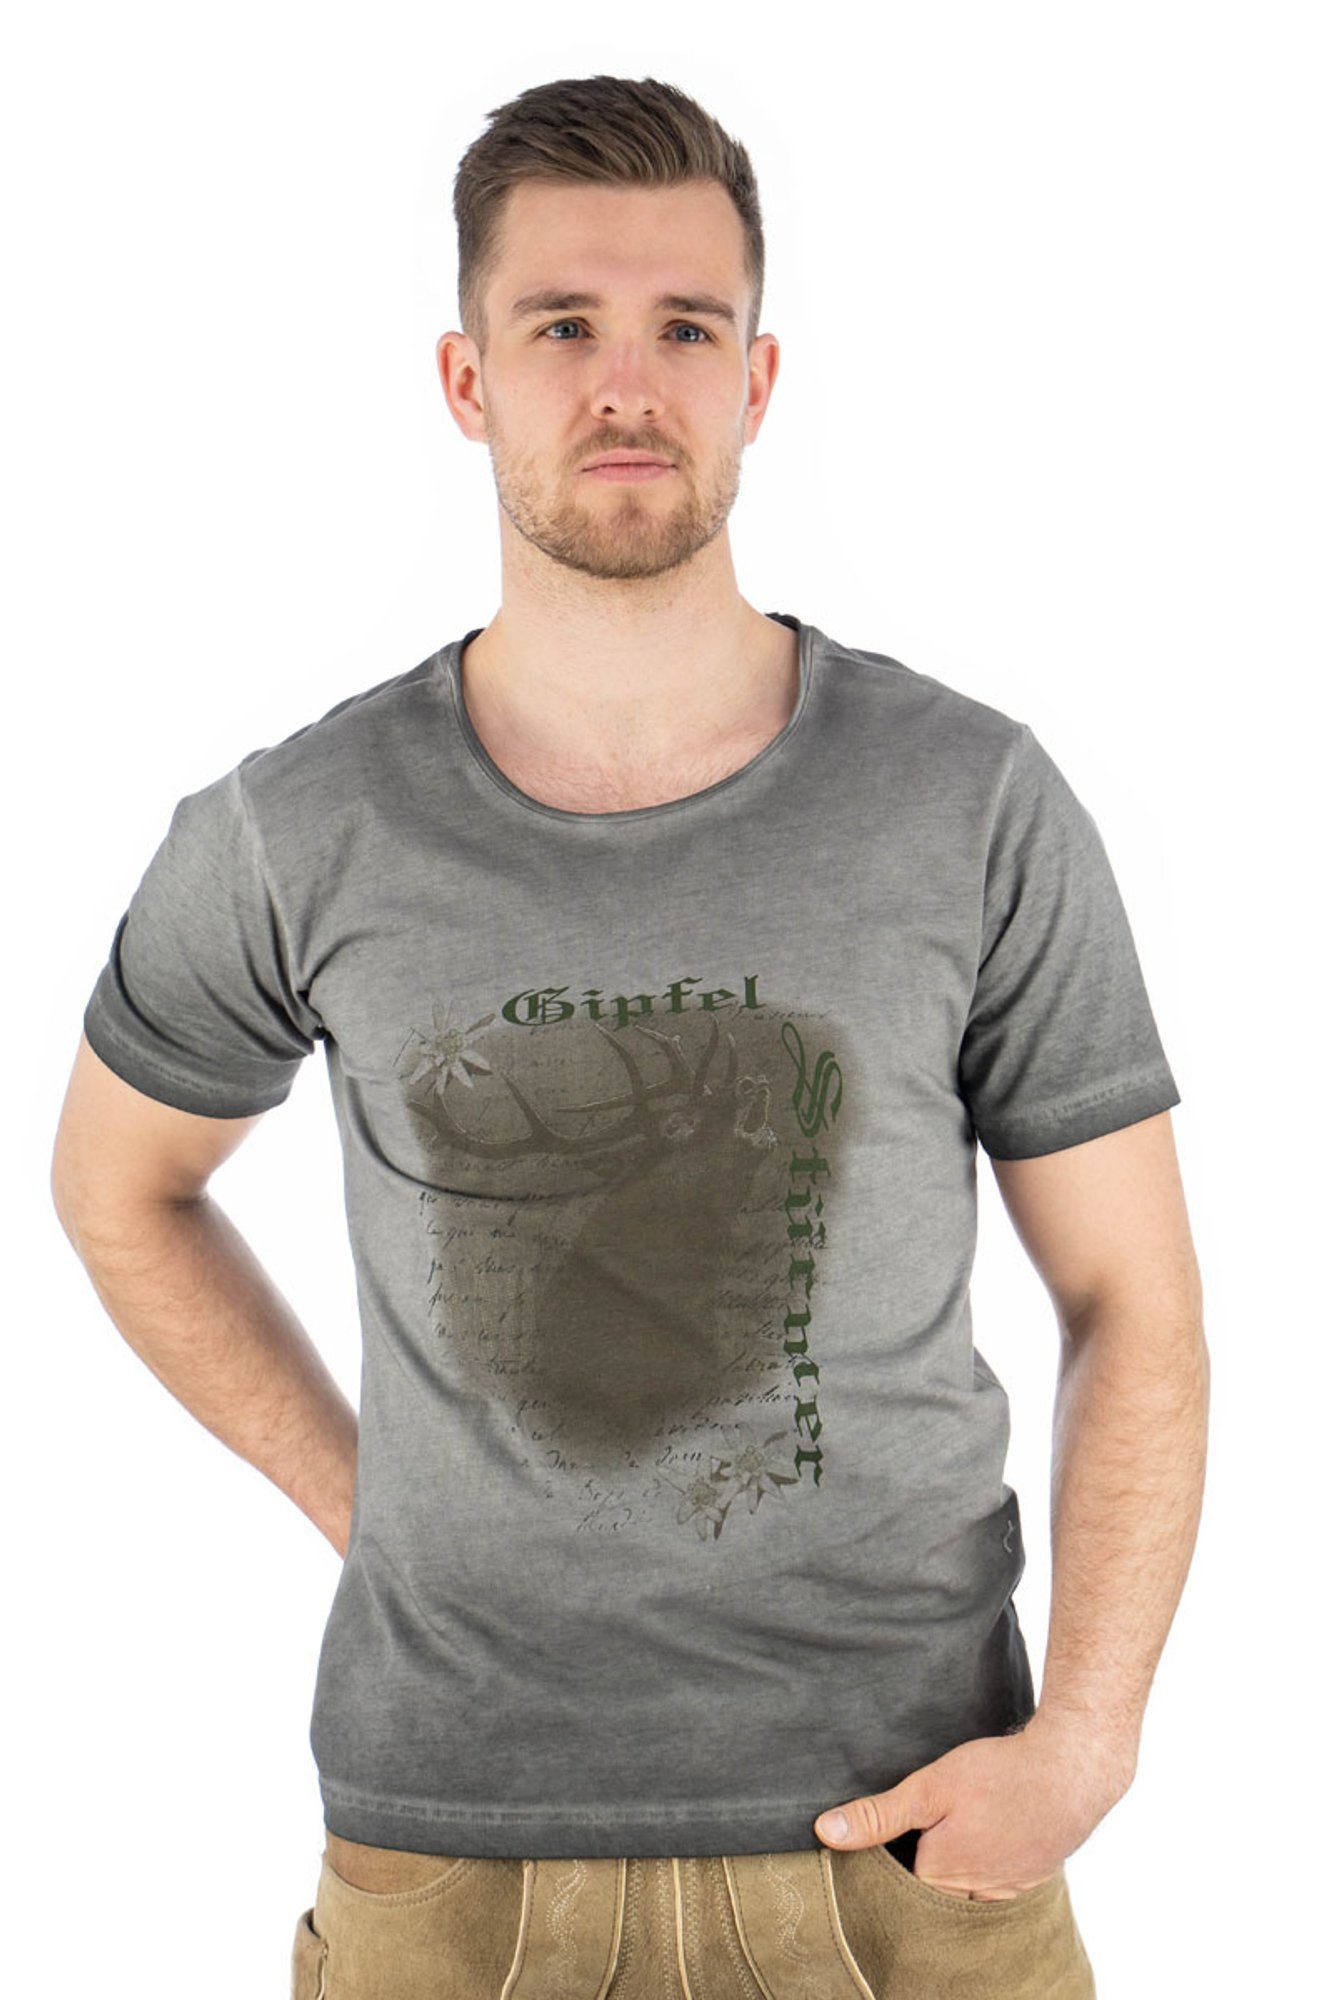 anthrazit Motivdruck Kurzarm T-Shirt Trachtenshirt mit OS-Trachten Lyusop